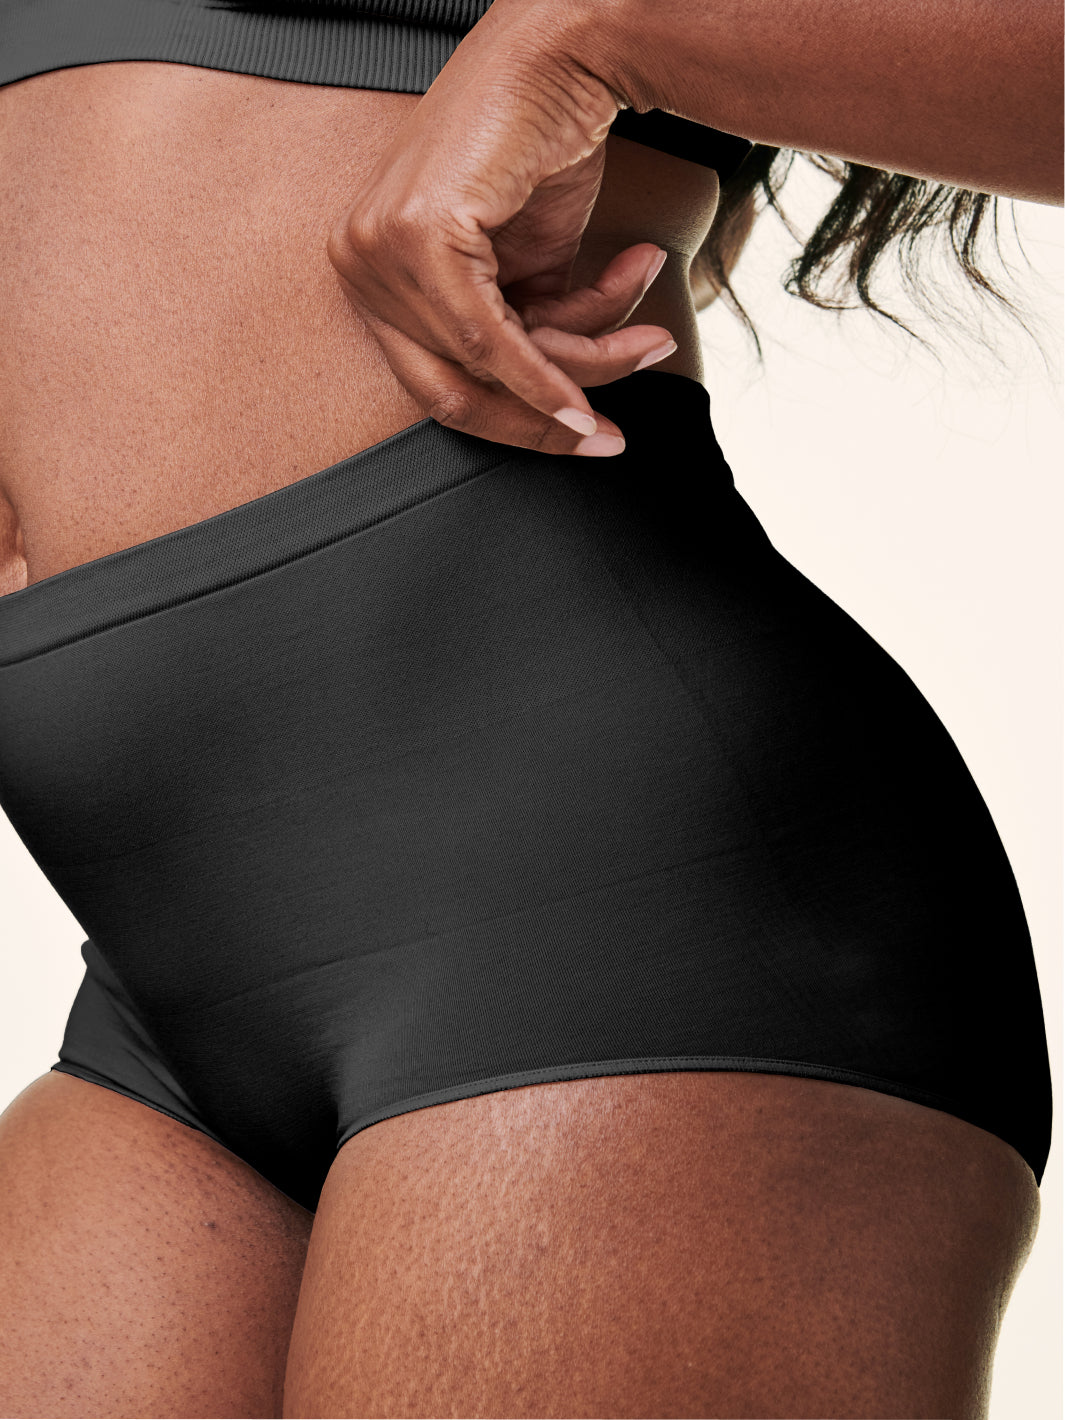 BRAVADO DESIGNS, Intimates & Sleepwear, 2 Bravado Designs Womens High  Rise Seamless Panty New Without Tags